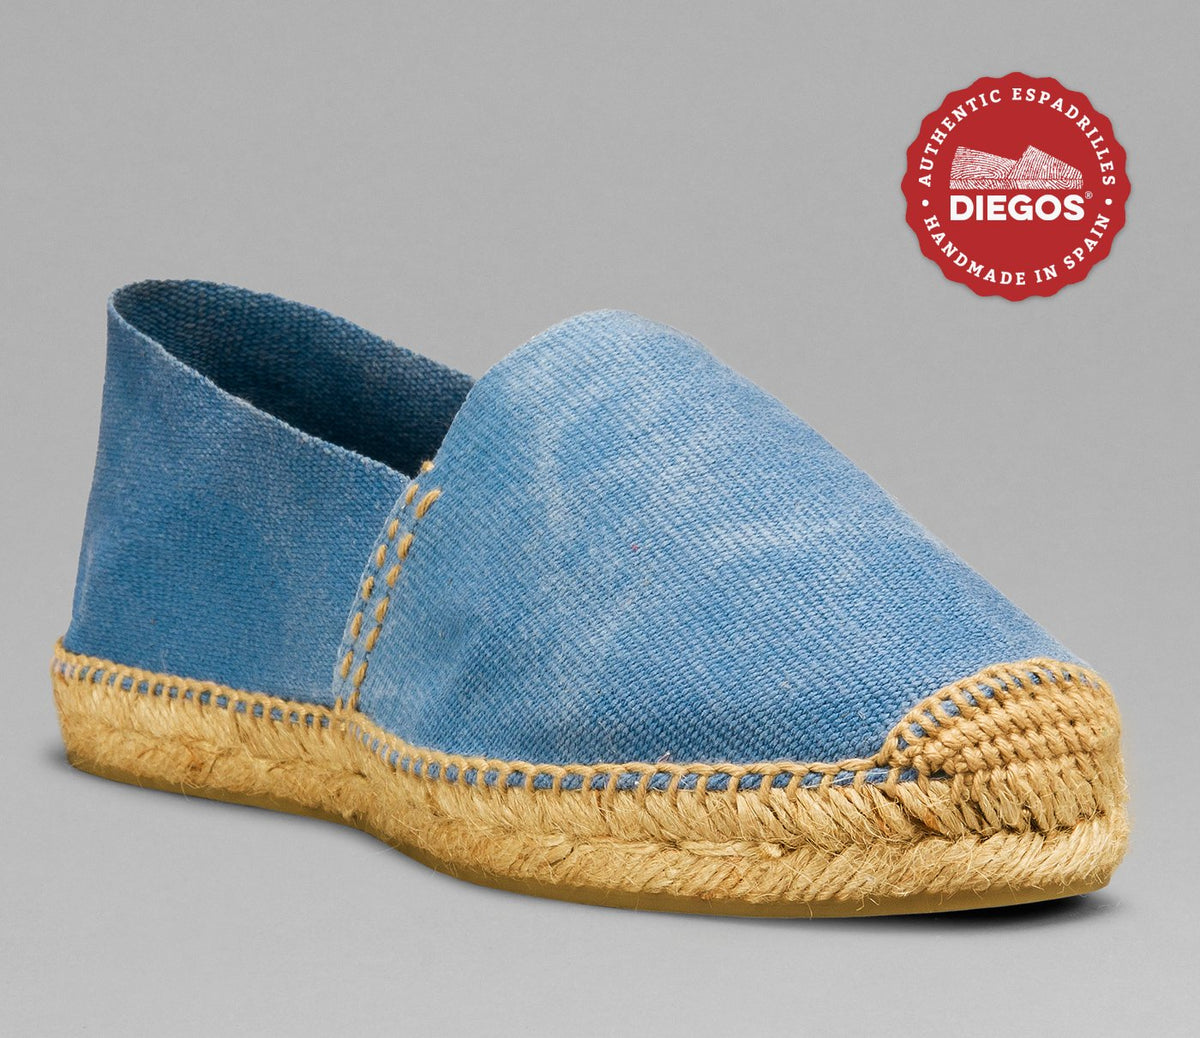 Washed look blue espadrilles for women | DIEGOS� hand espadrilles – diegos.com